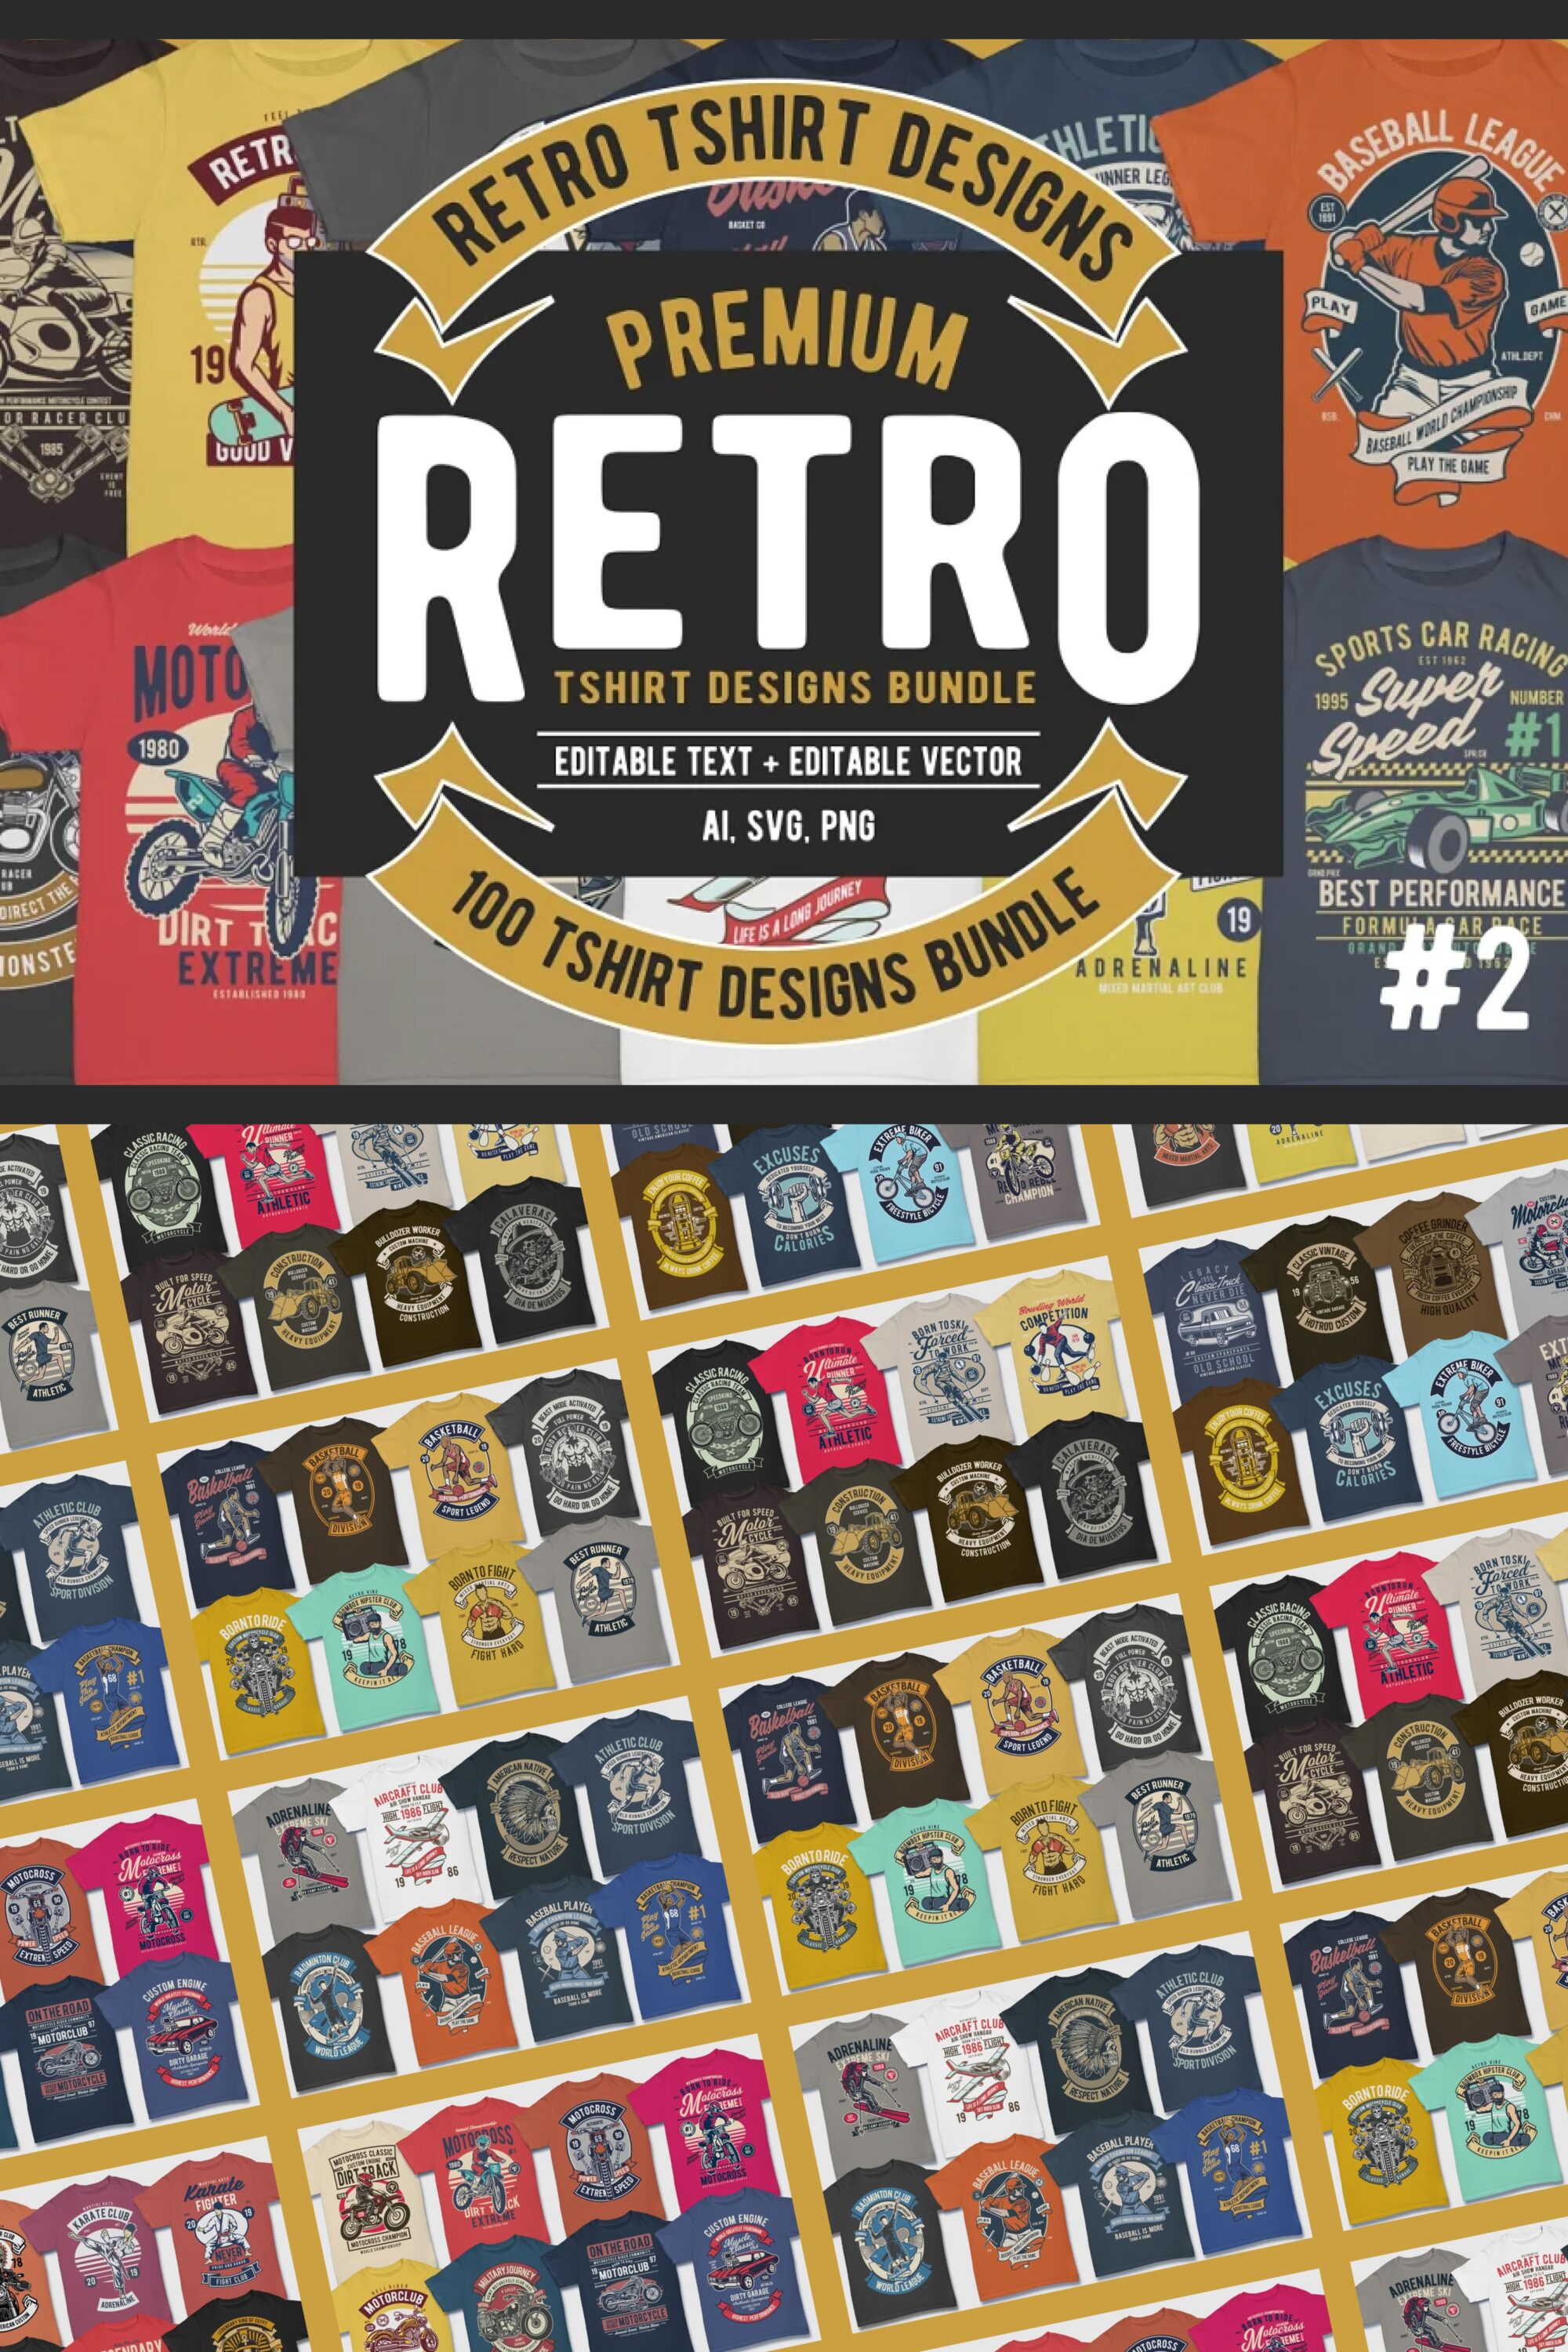 100 Retro Tshirt Designs Bundle #2 pinterest image.